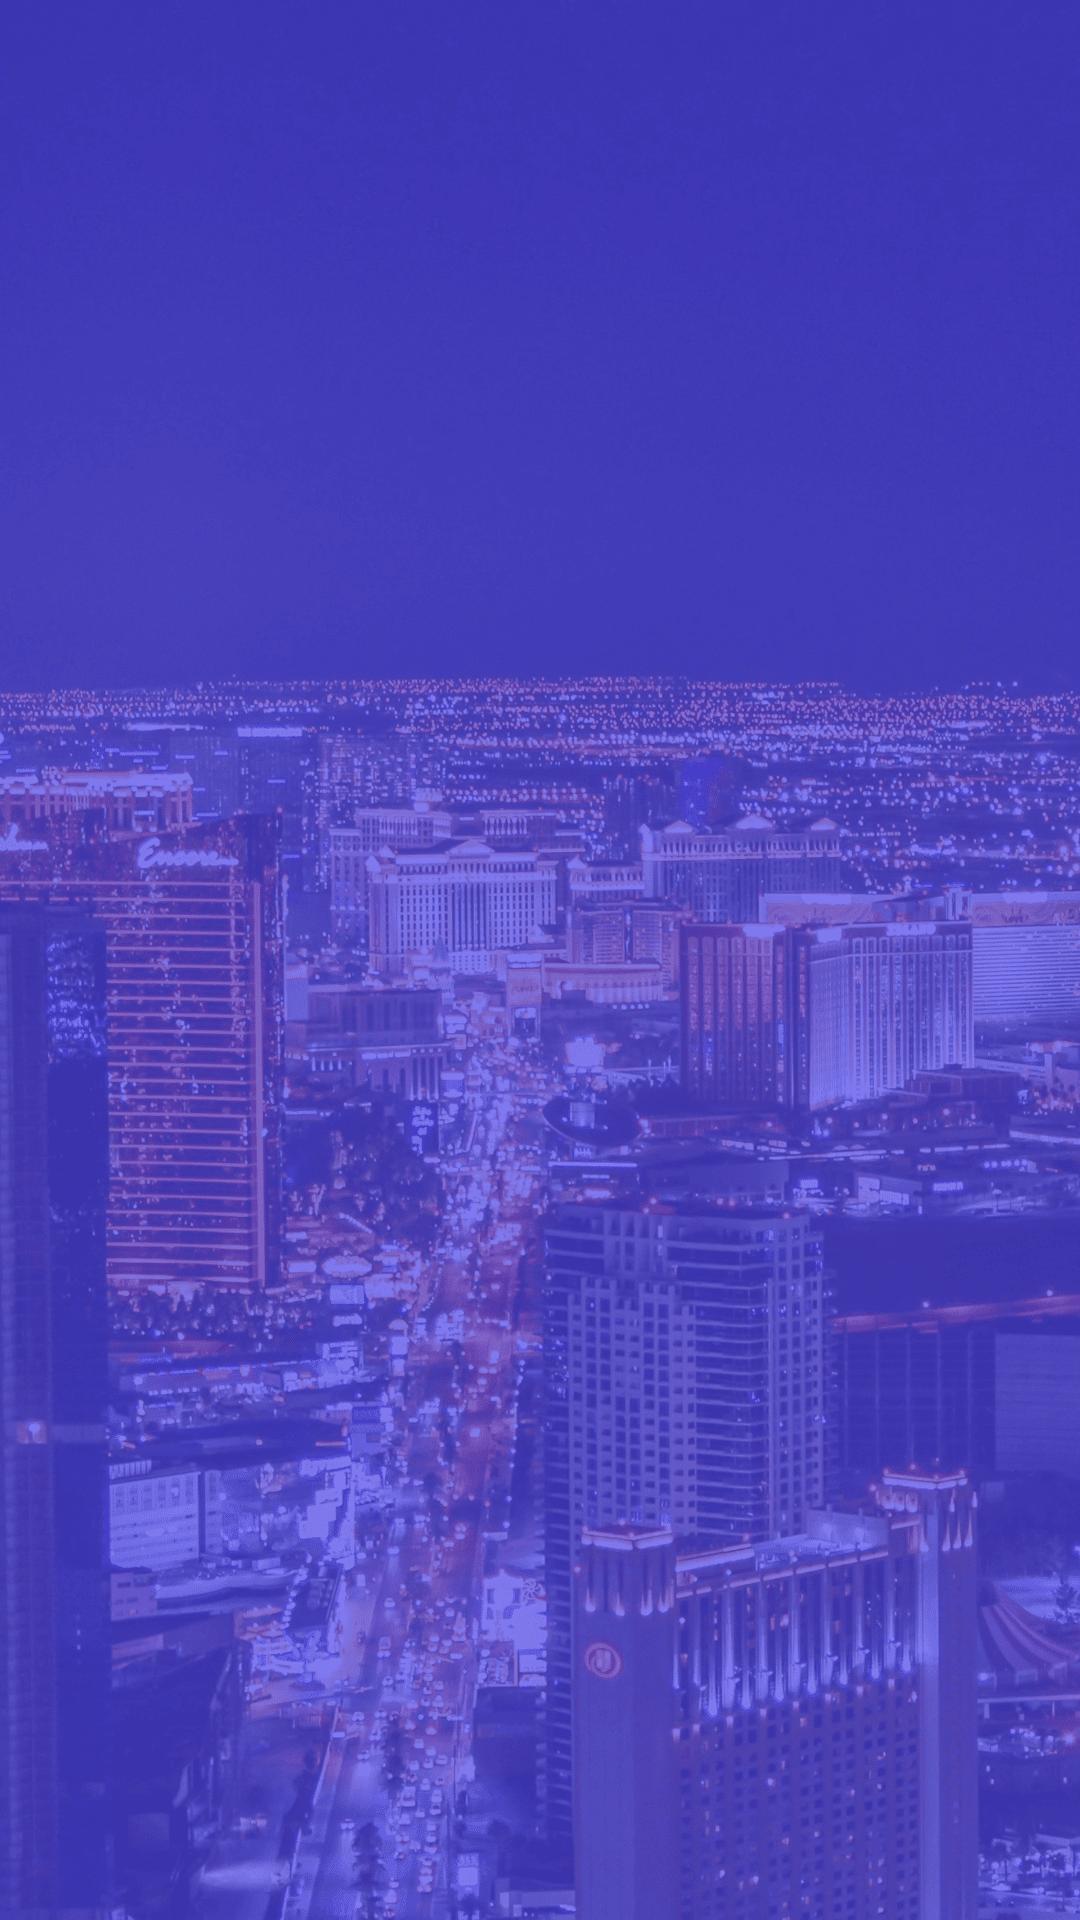 Las Vegas skyline over digital marketing